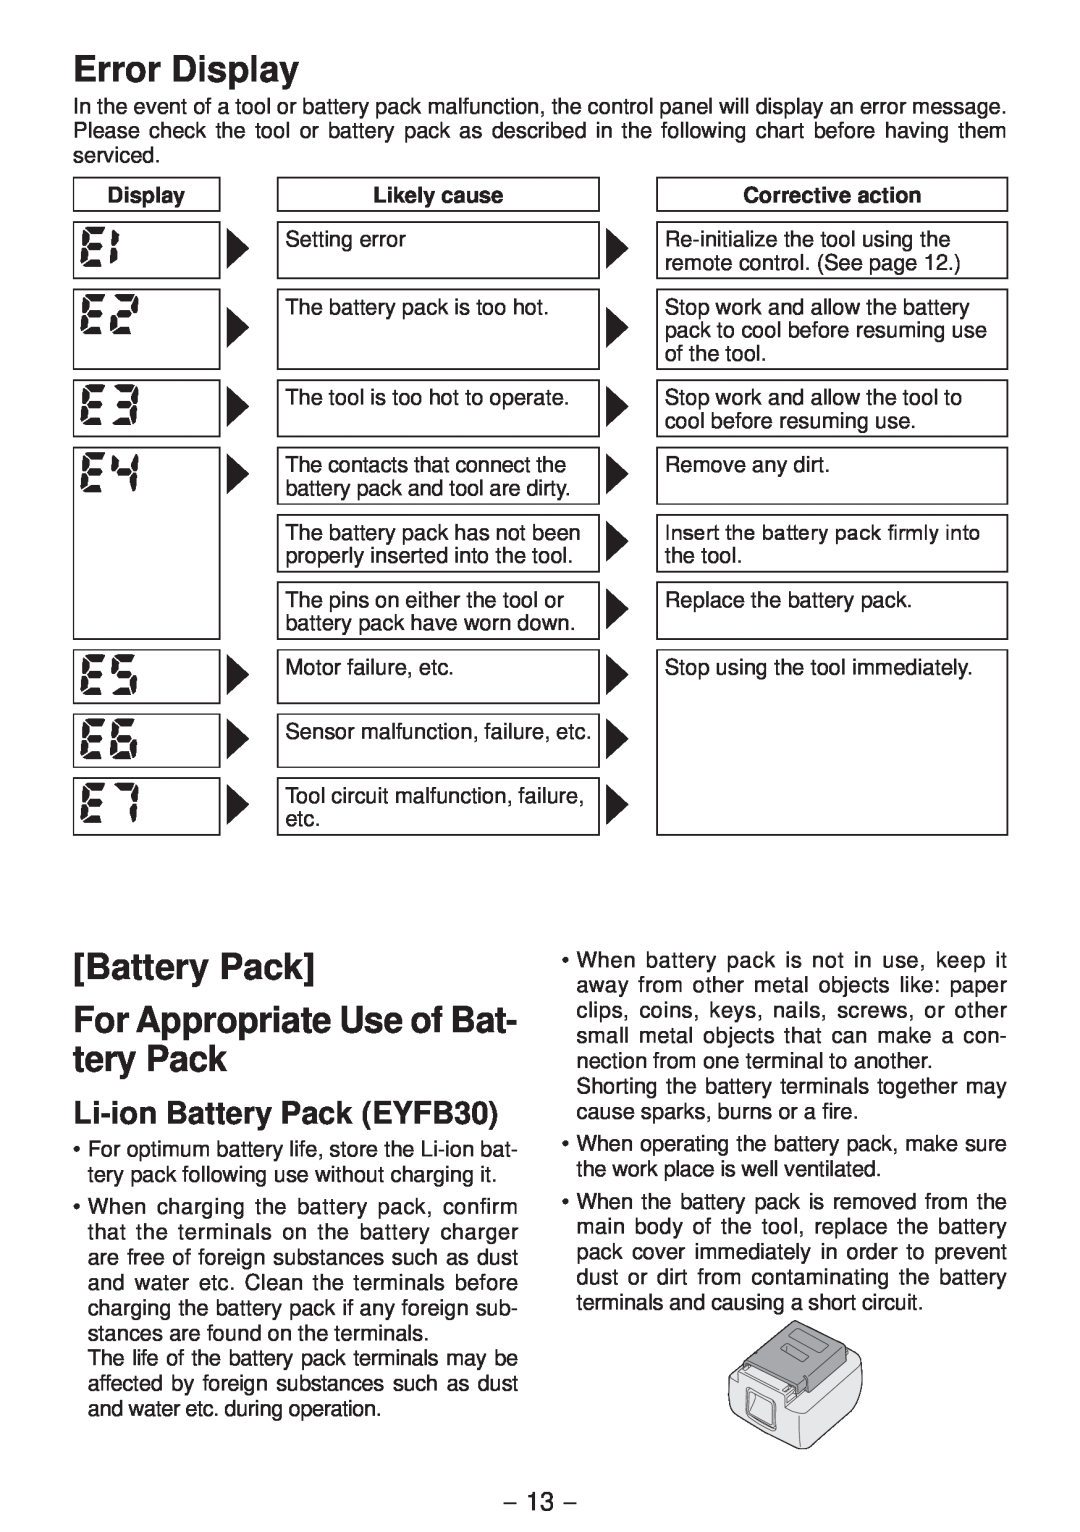 Panasonic EYFLA3J, EYFLA2Q Error Display, Battery Pack For Appropriate Use of Bat­ tery Pack, Li-ion Battery Pack EYFB30 